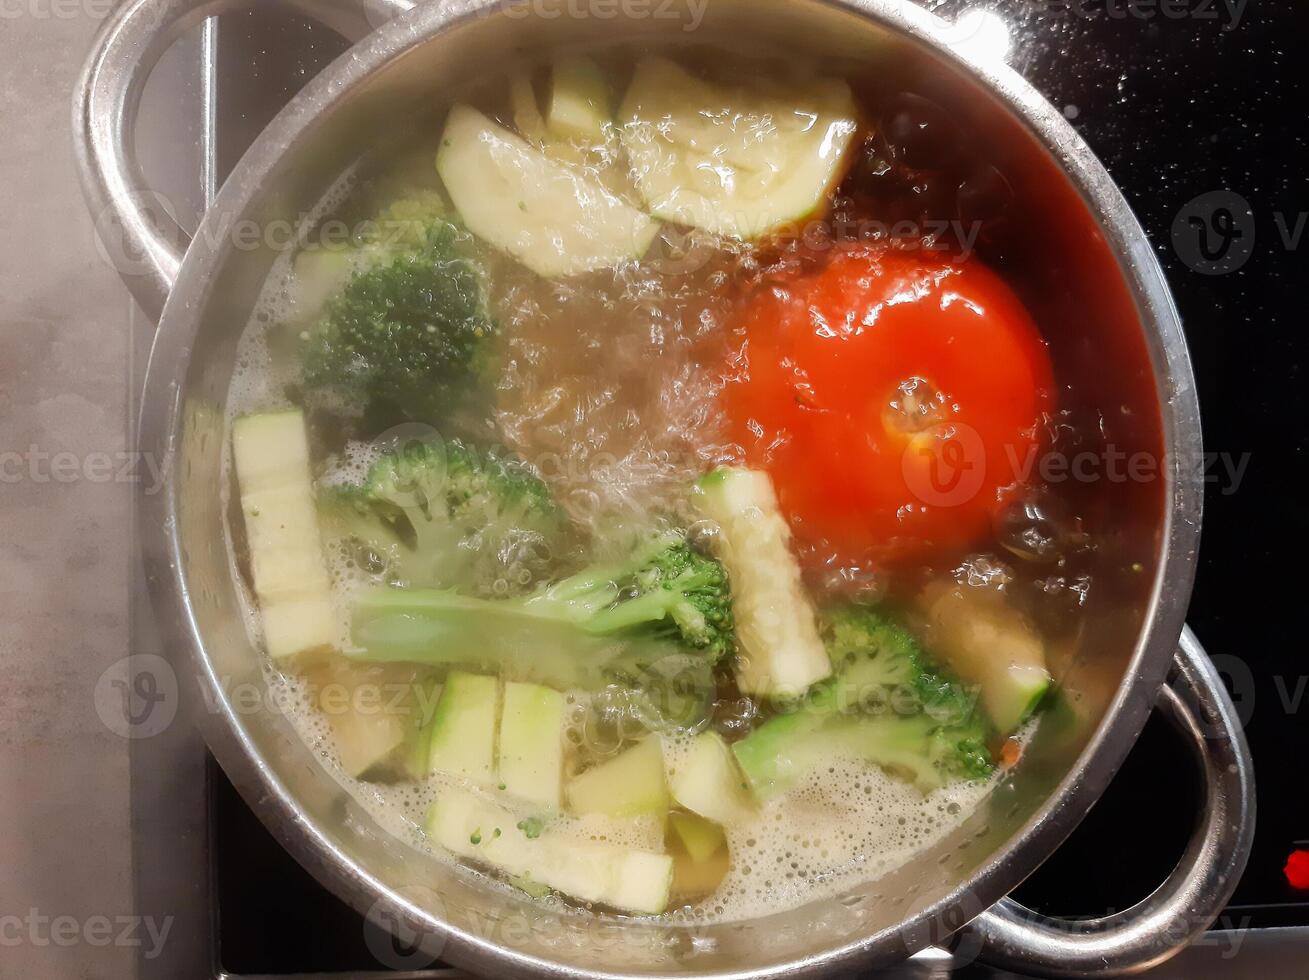 vers groente soep in een pan. groente bouillon. foto